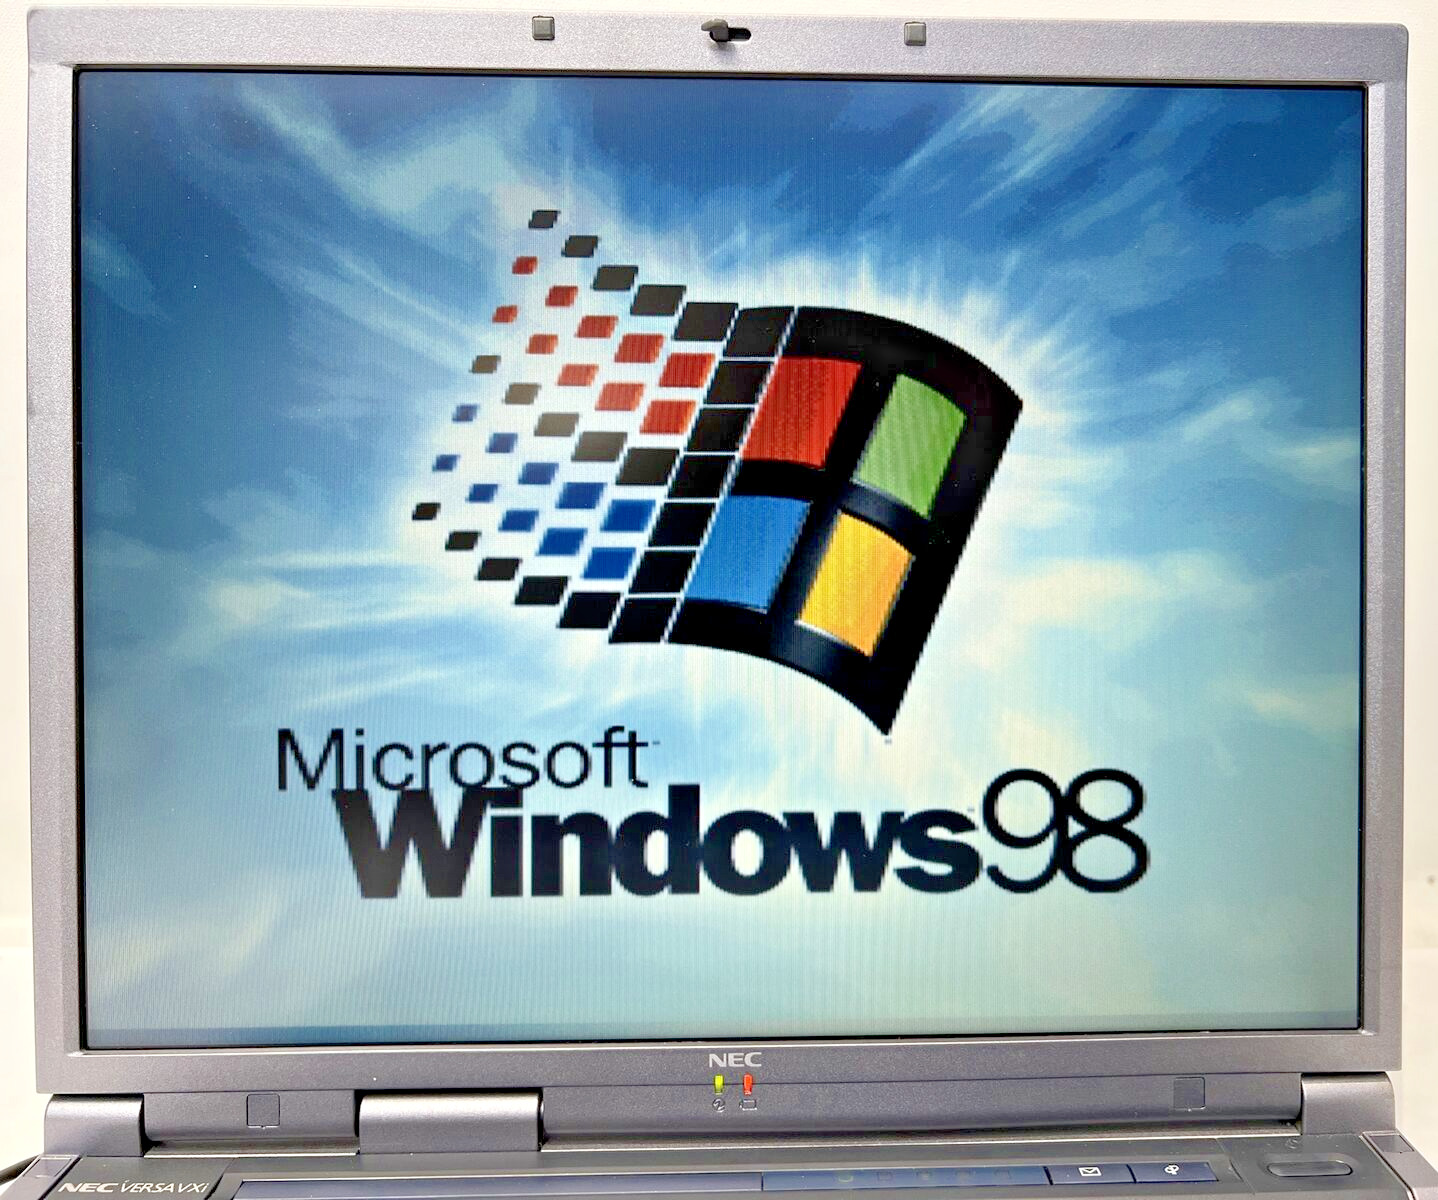 NEC VERSA VXi Laptop Pentium iii, 192MB RAM, 9.35GB HDD, Win 98 w/ Original PSU